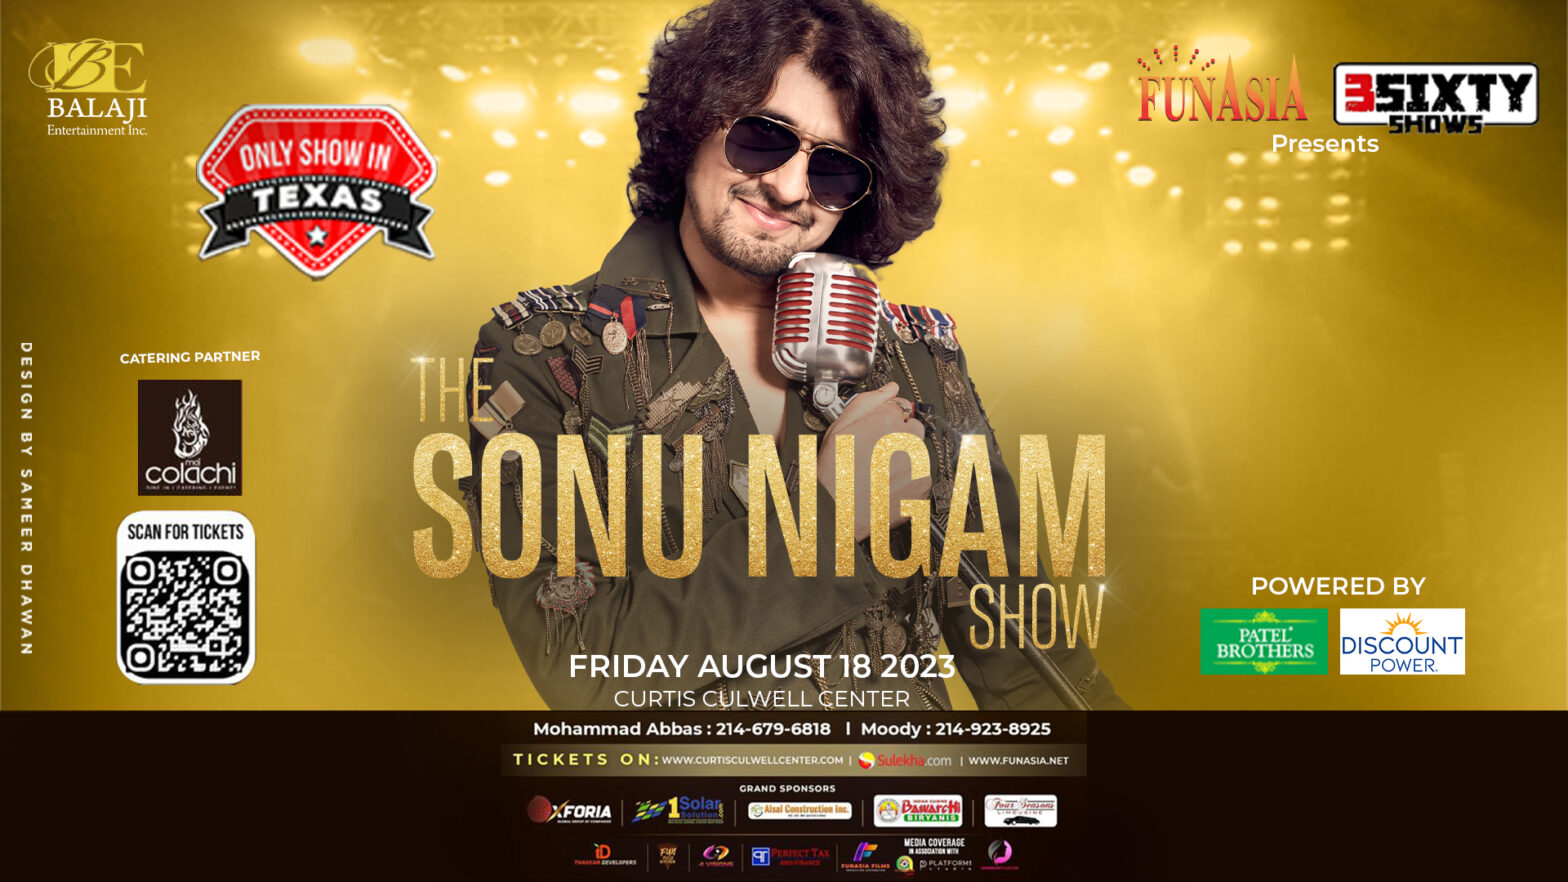 The Sonu Nigam Show